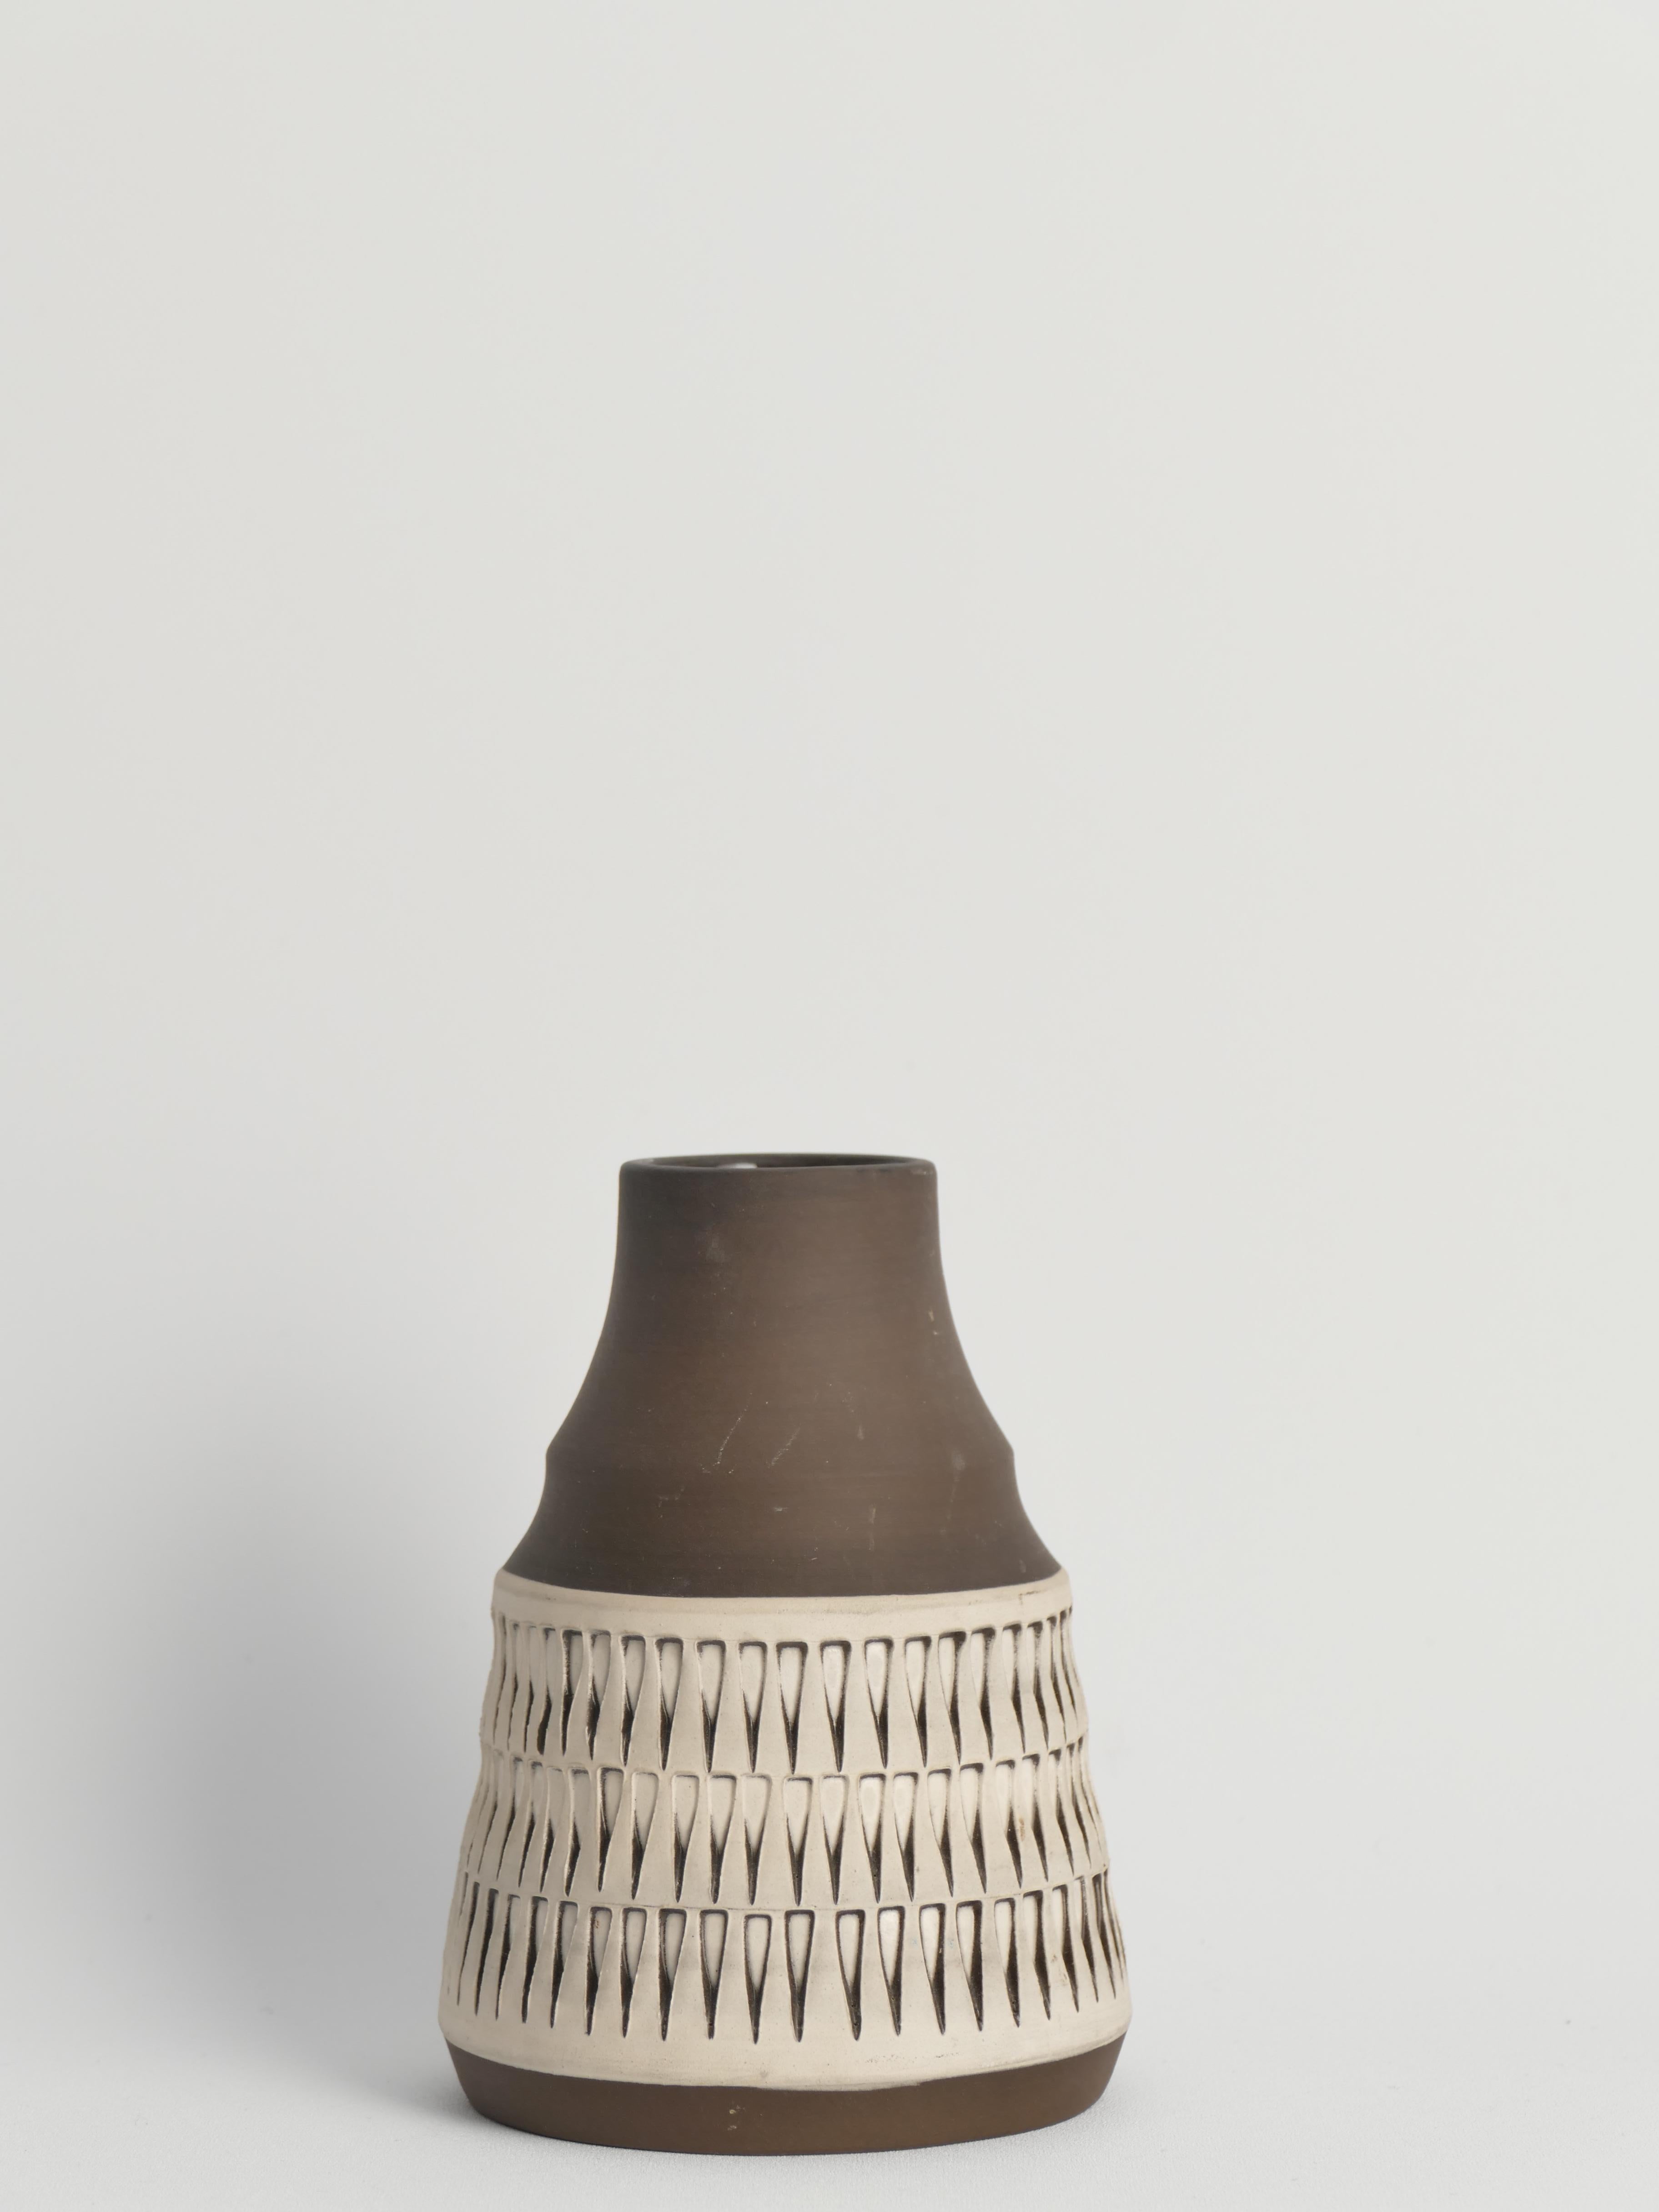 Swedish Scandinavian Modern Ceramic Vase, by Tomas Anagrius for Alingsås Keramik For Sale